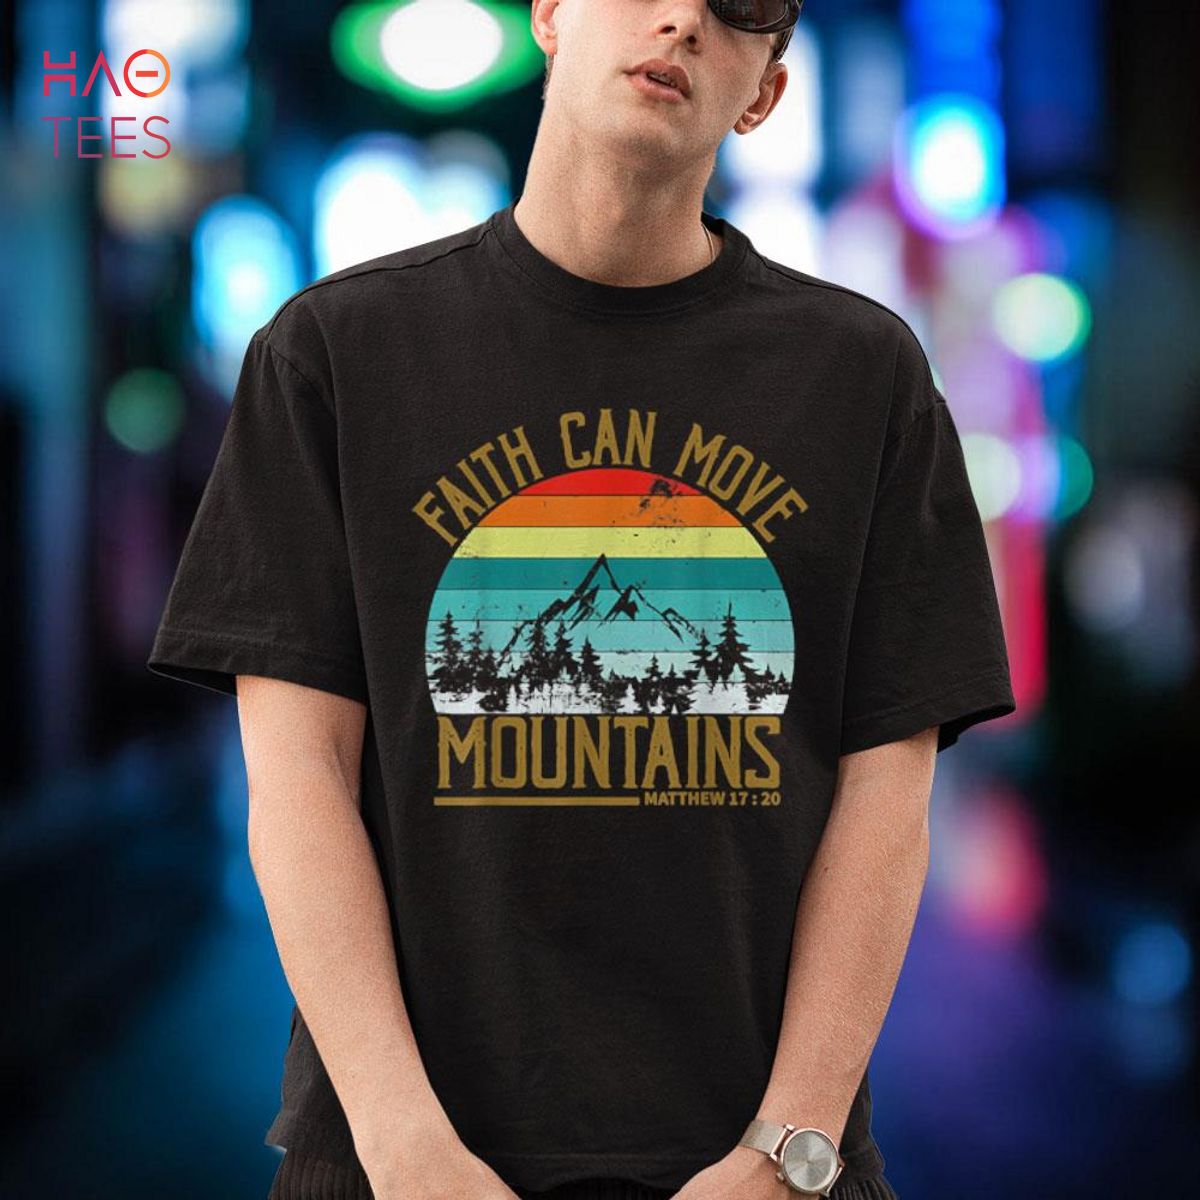 Vintage Retro Sunset Faith Can Move Mountains 1720 Shirt